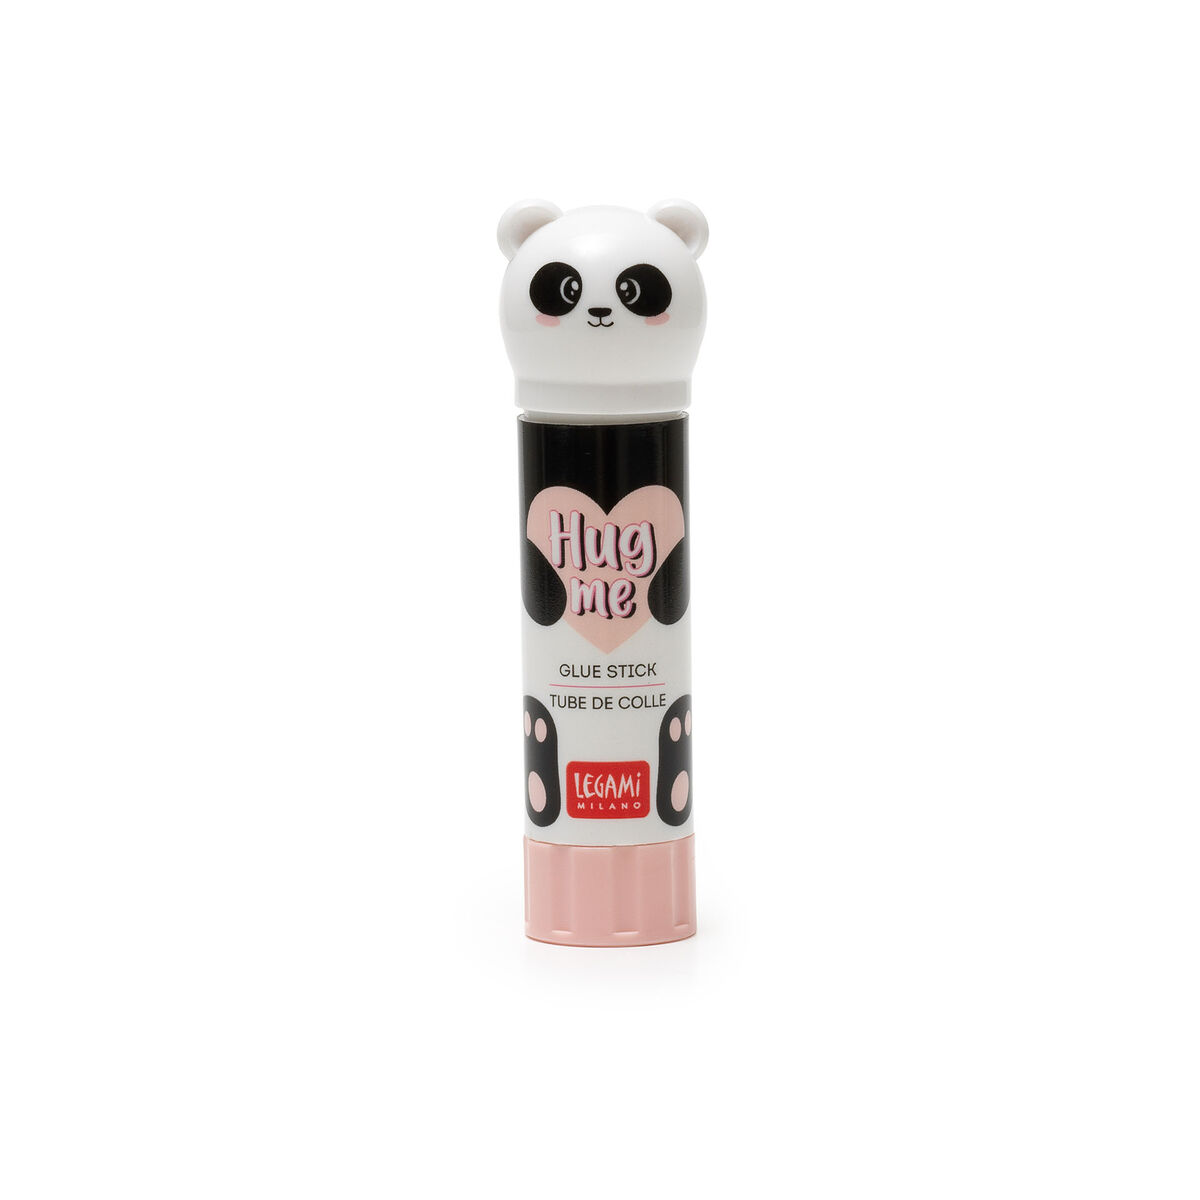 LEGAMI Glue Stick Hug Me Panda